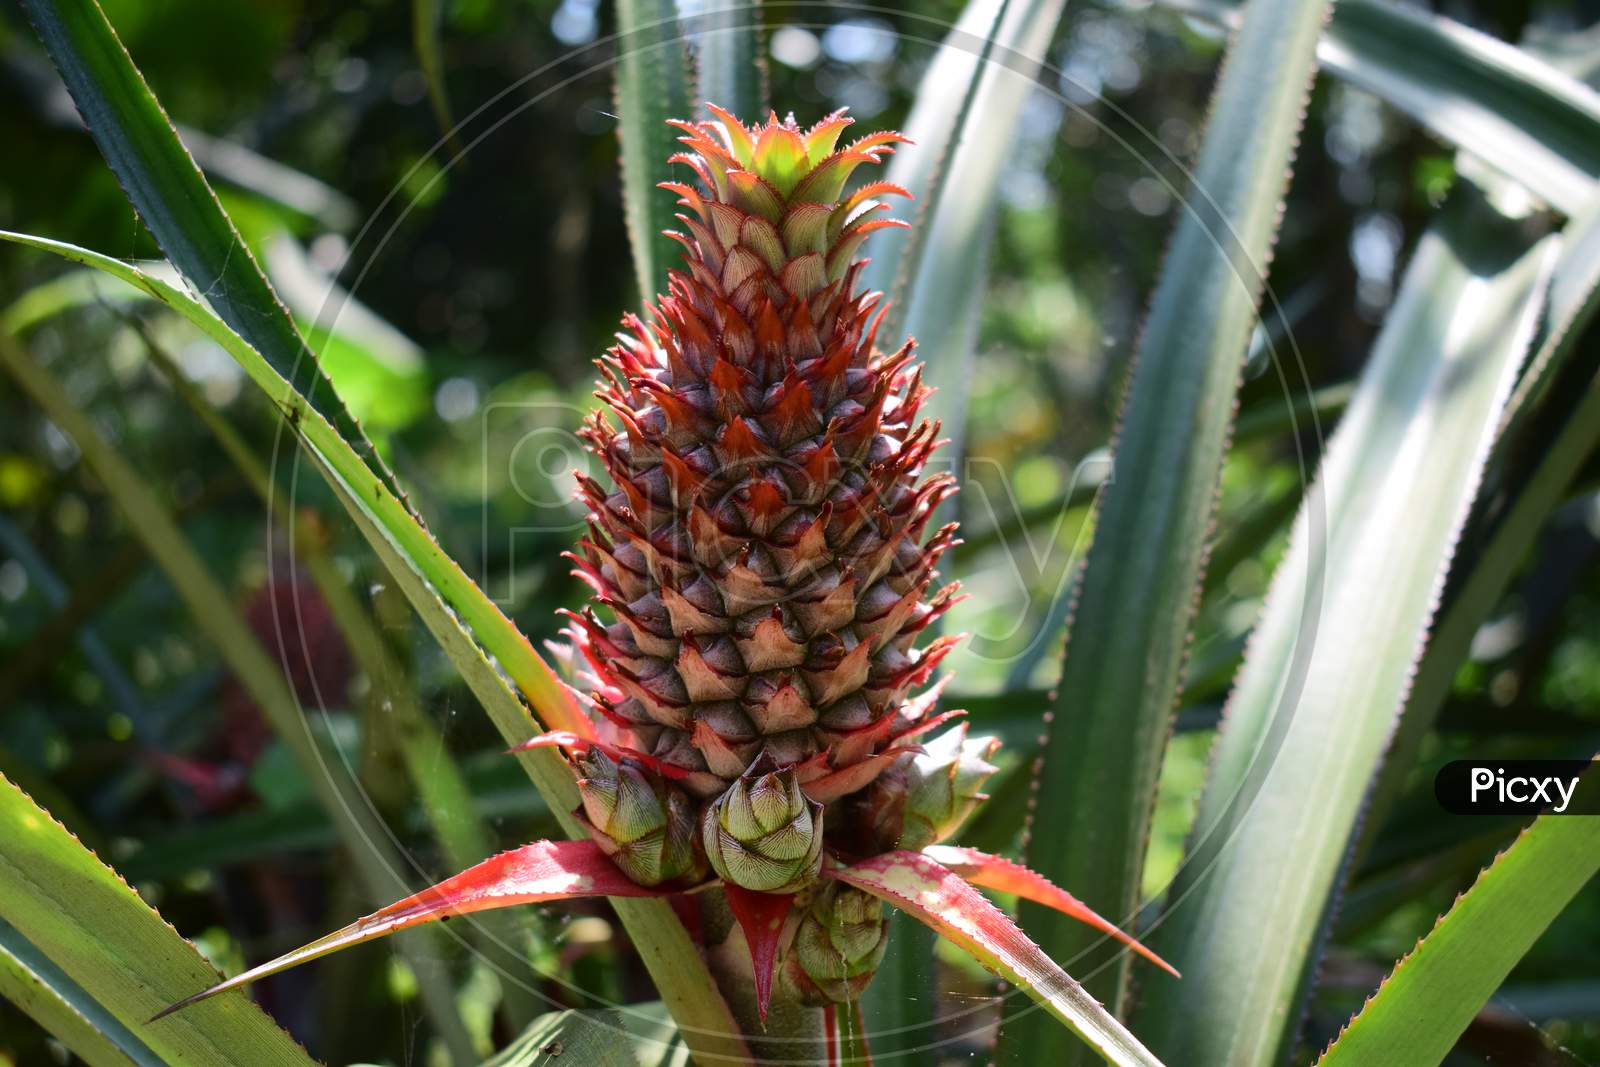 Pineapple Captured In Hot Summer Season In My Village Garden